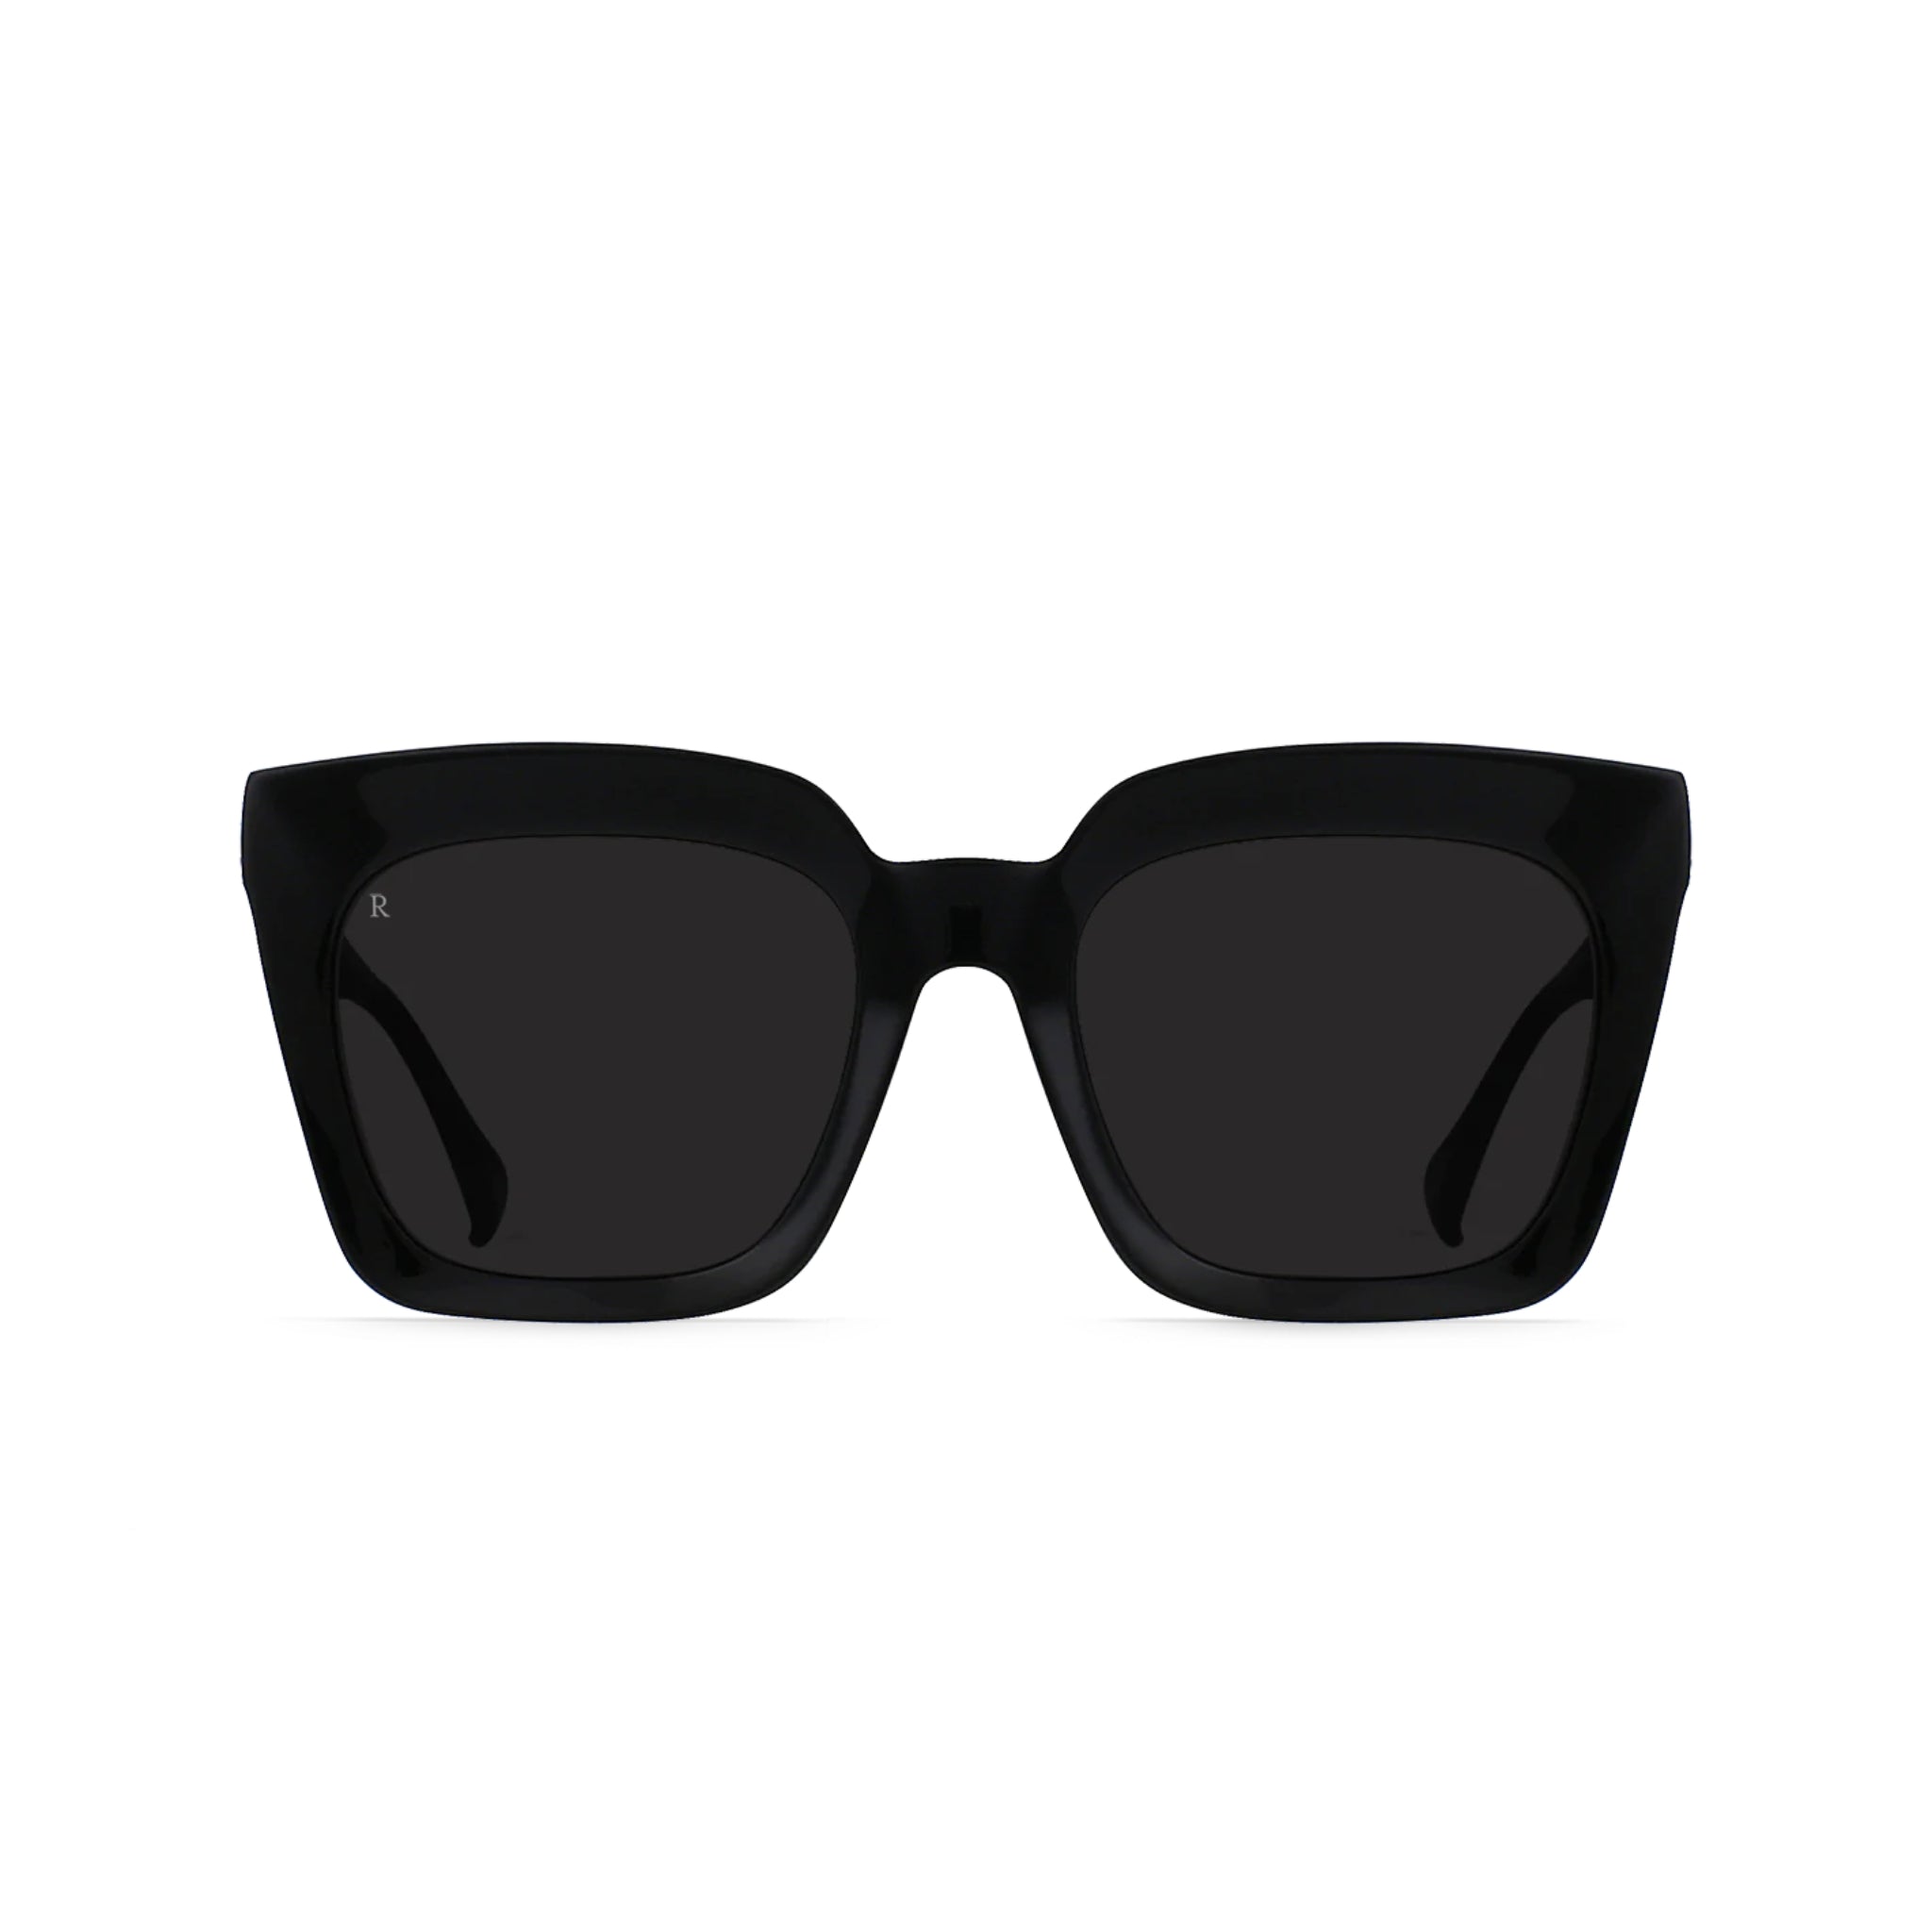 Raen Vine Sunglasses - Black / Dark Smoke